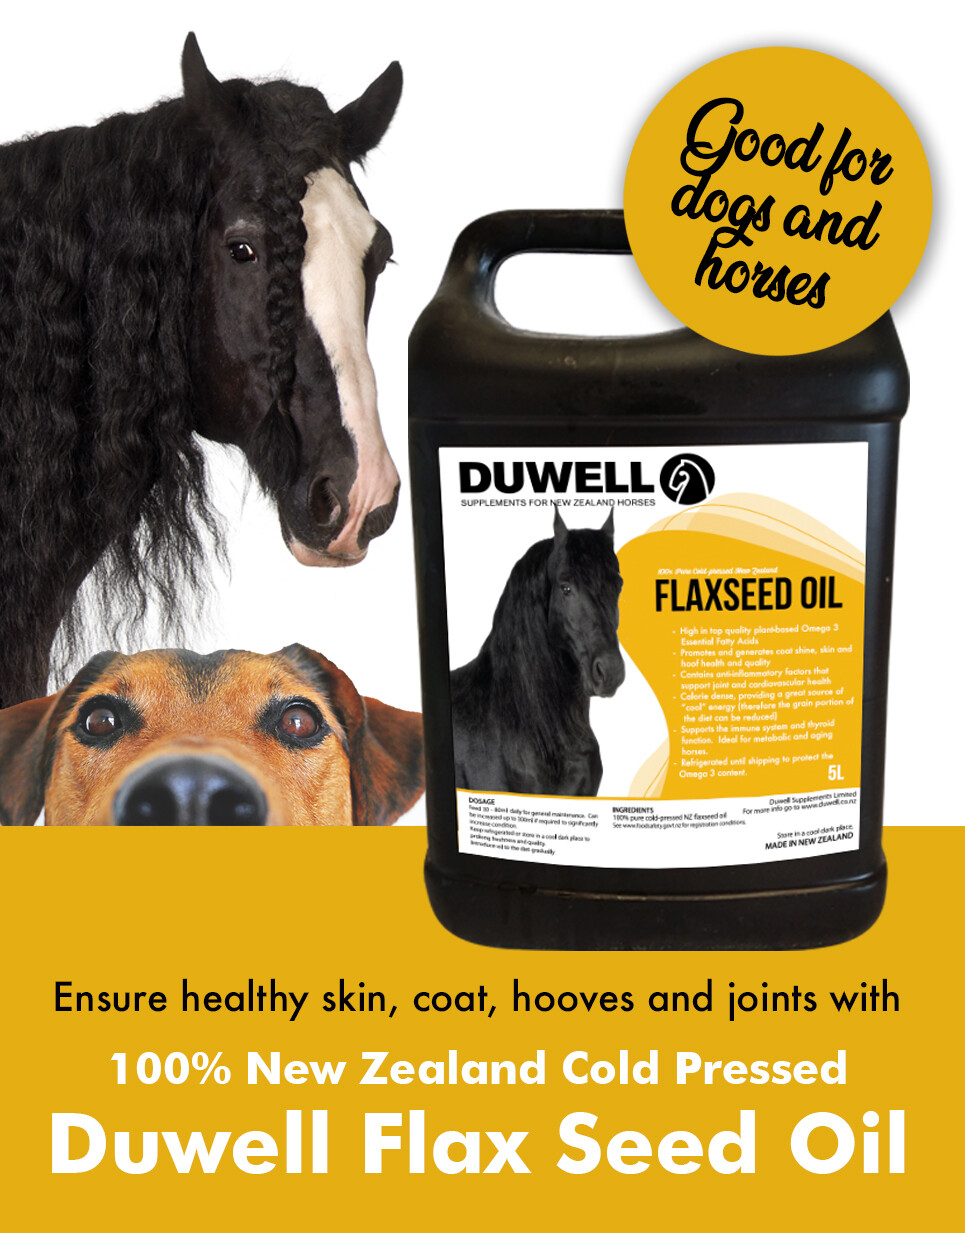 Duwell Flax Seed Oil